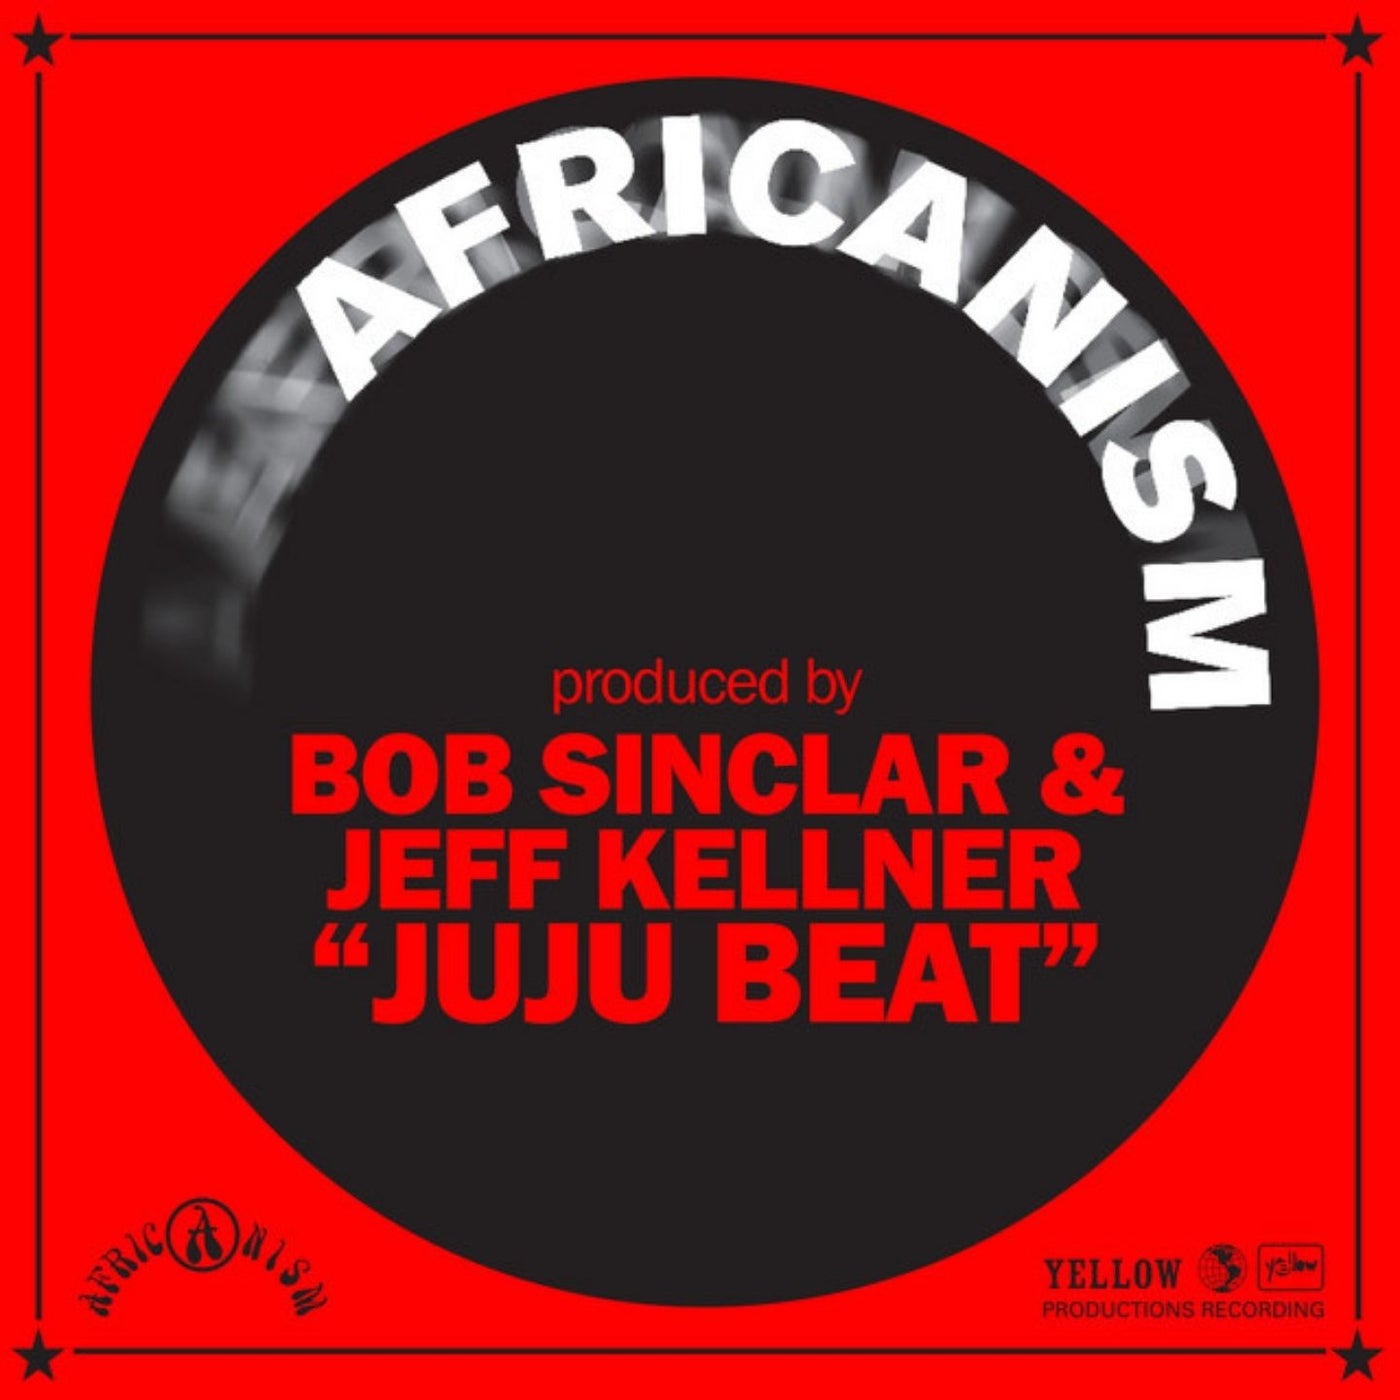 Africanism, Bob Sinclar & Jeff Kellner - Juju Beat [Yellow Productions]